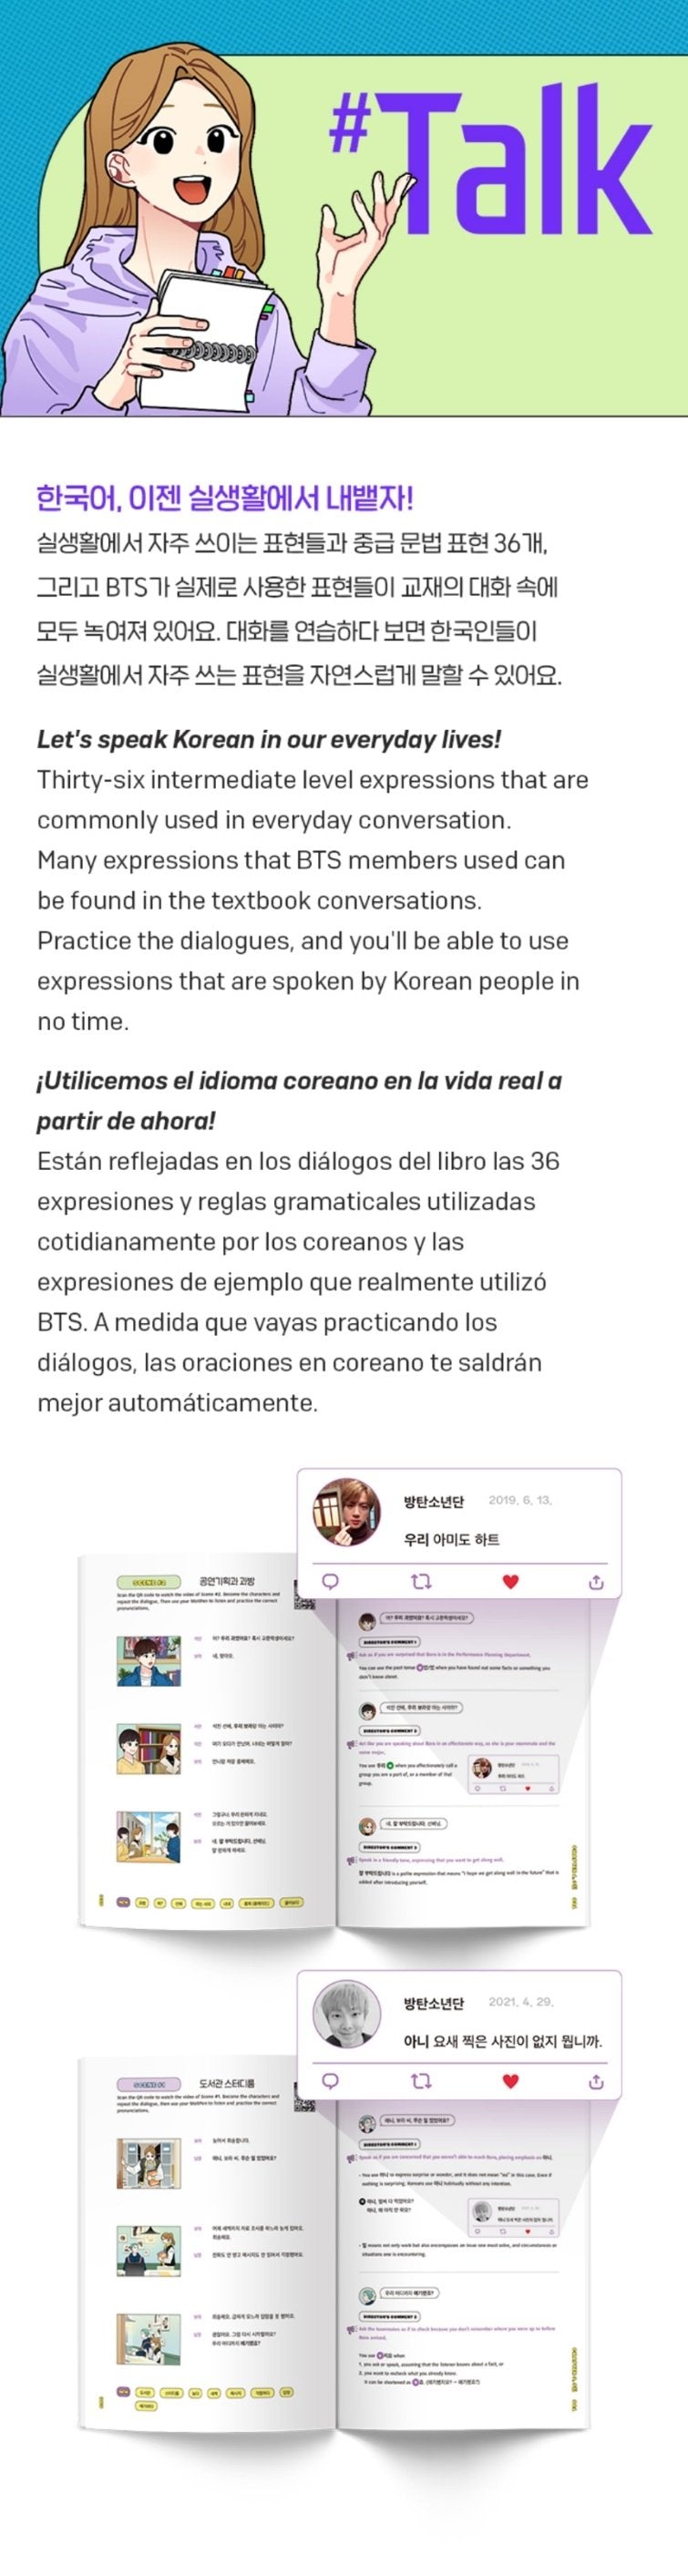 BTS - LEARN KOREAN SERIES TALK WITH BTS